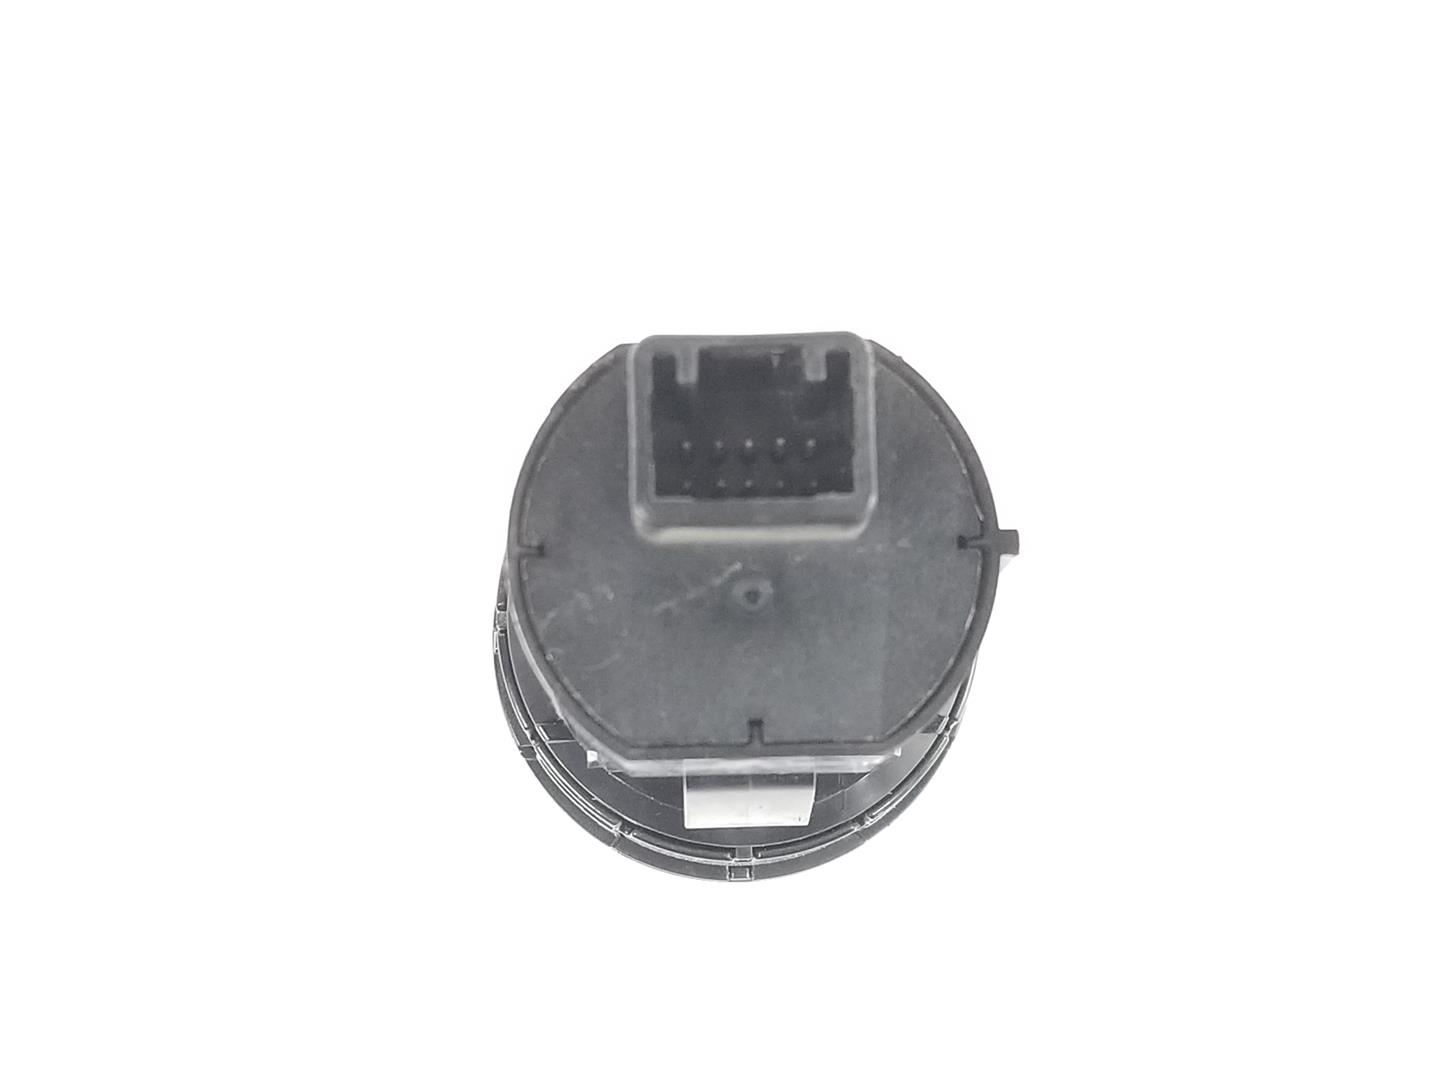 SUZUKI SX4 2 generation (2013-2020) Ignition Button 3729068L00, 3729068L00 24699476